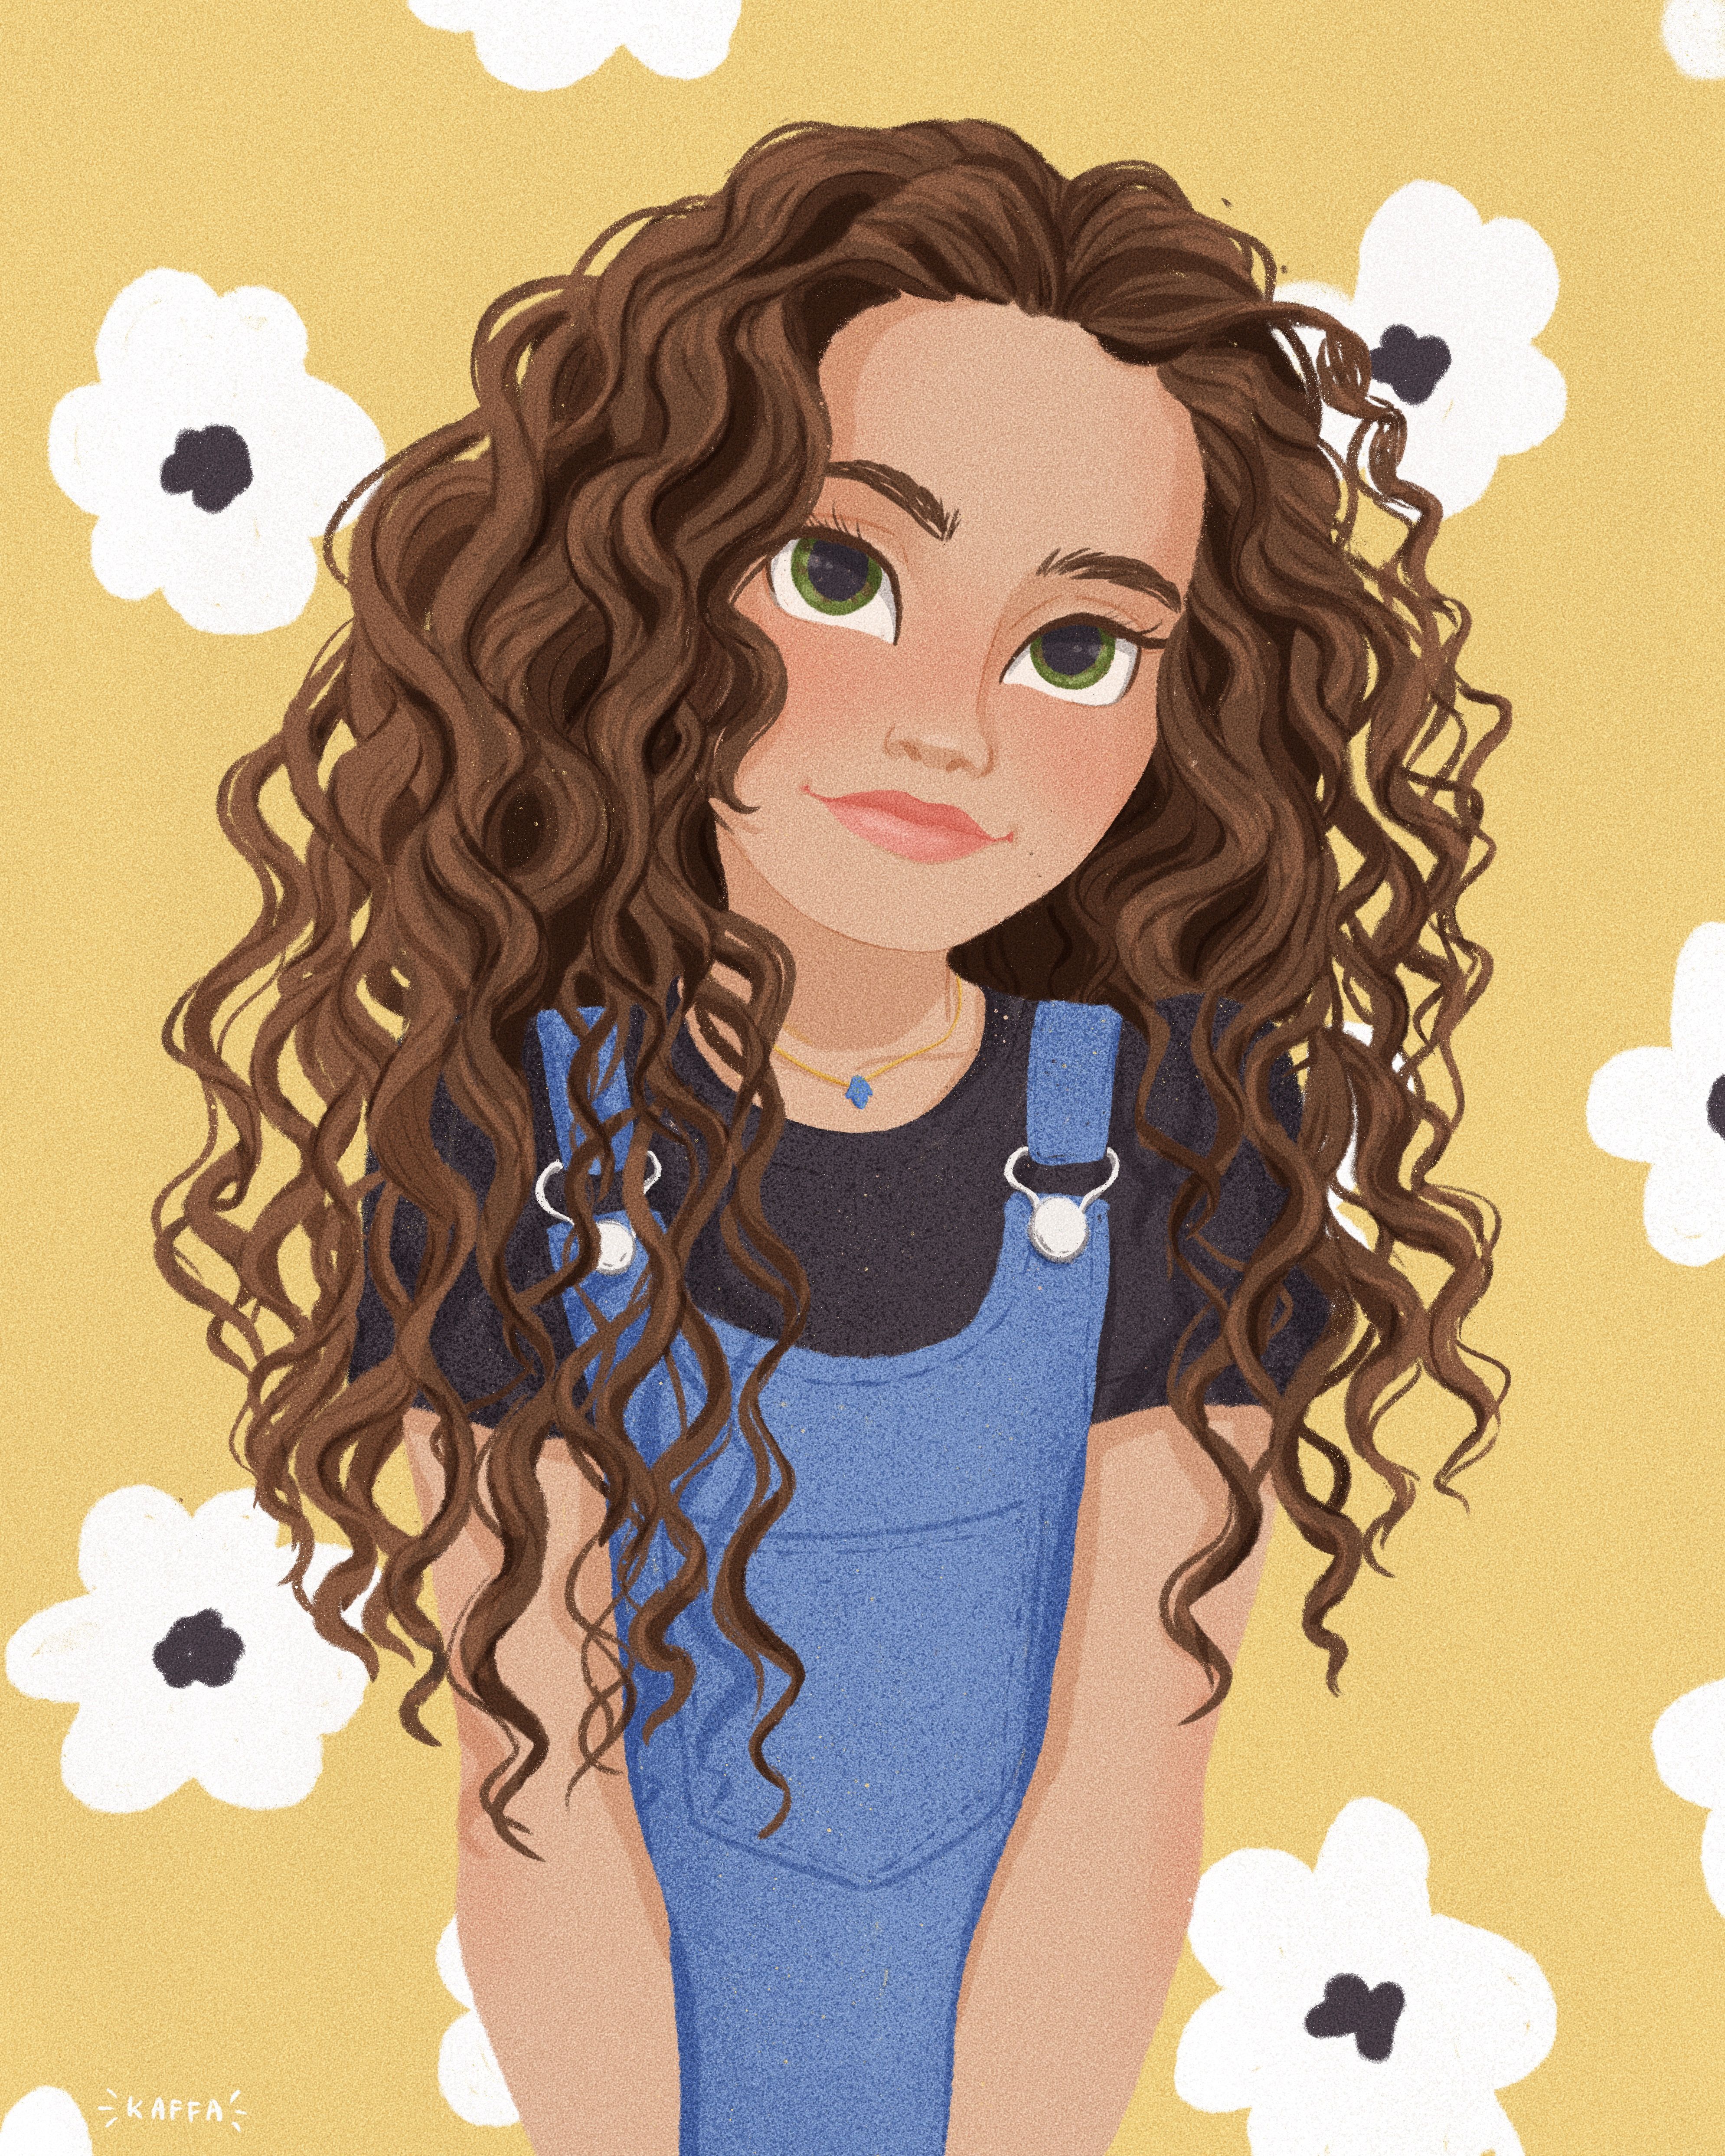 20231 Curly Hair Girl Cartoon Images Stock Photos  Vectors  Shutterstock